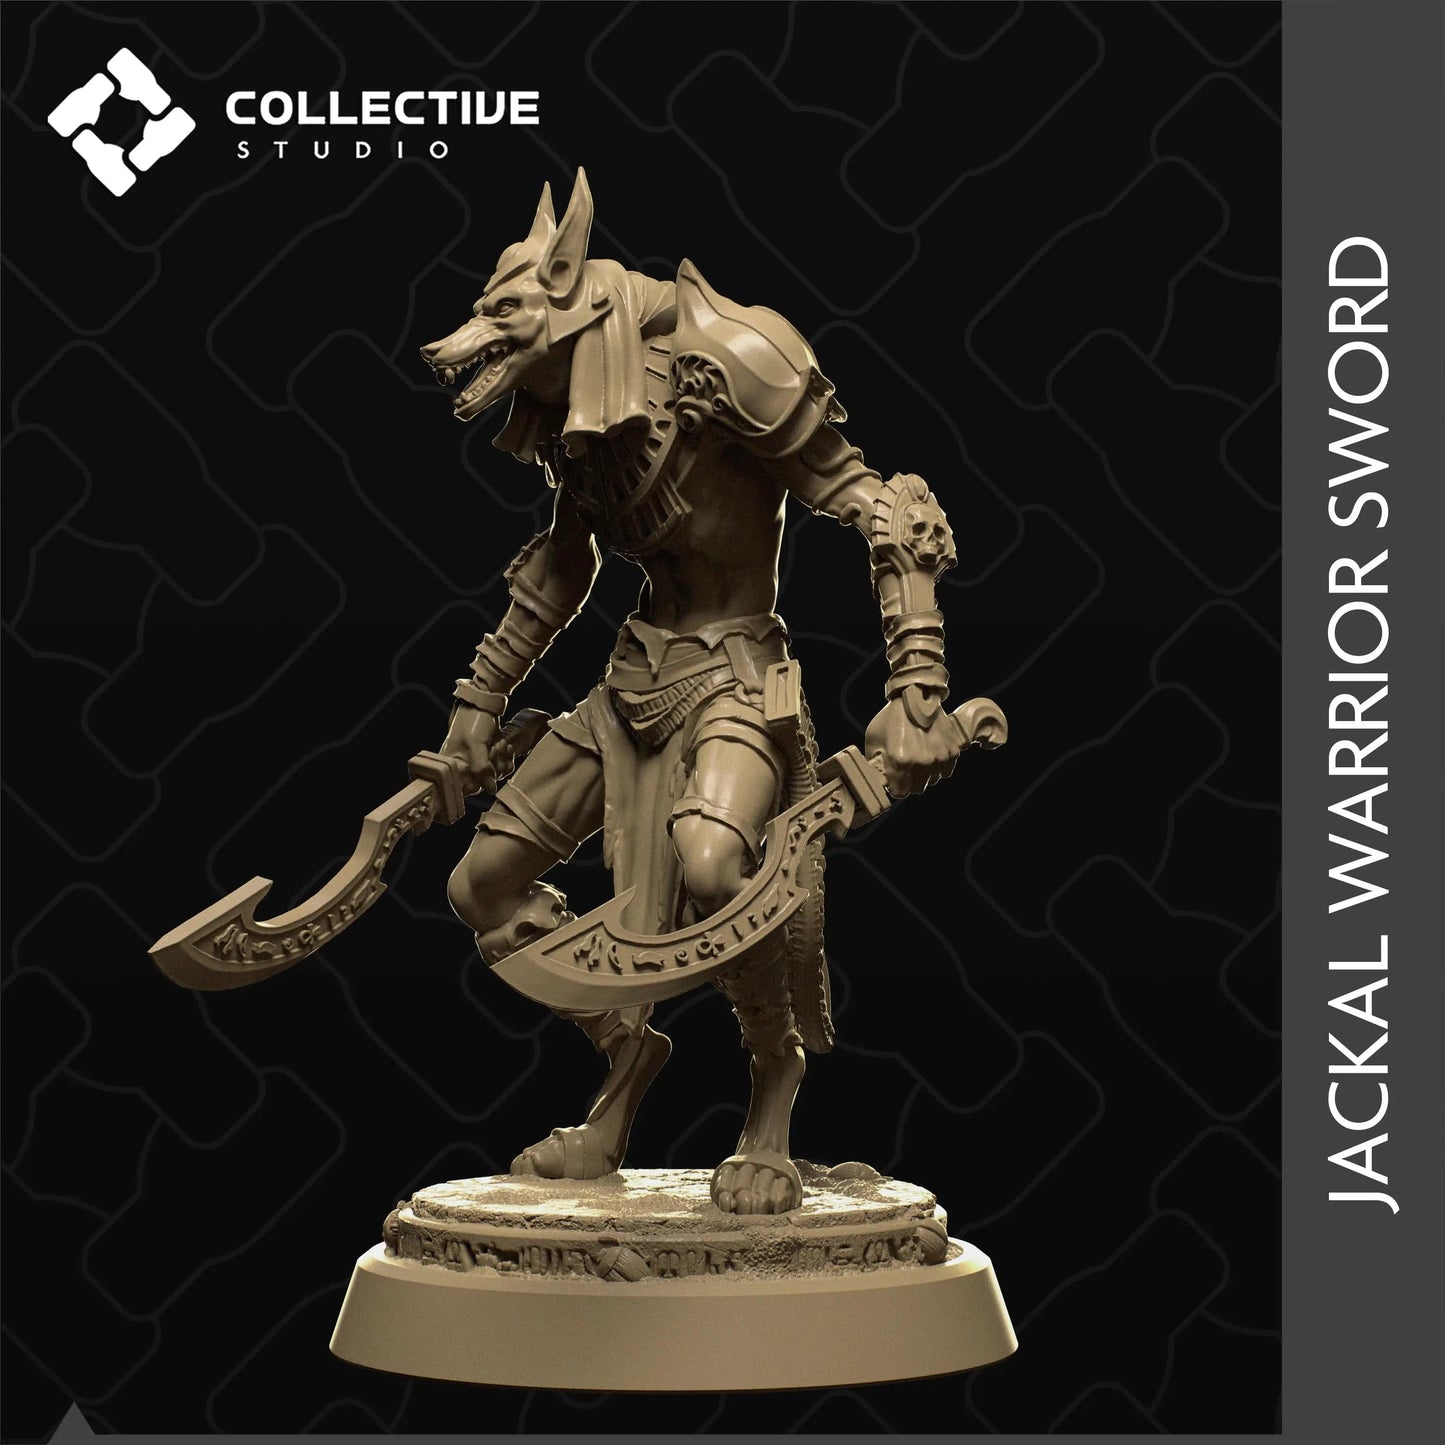 Jackal-Headed Desert Warrior Sword | D&D TTRPG Monster Miniature | Collective Studio - Tattles Told 3D